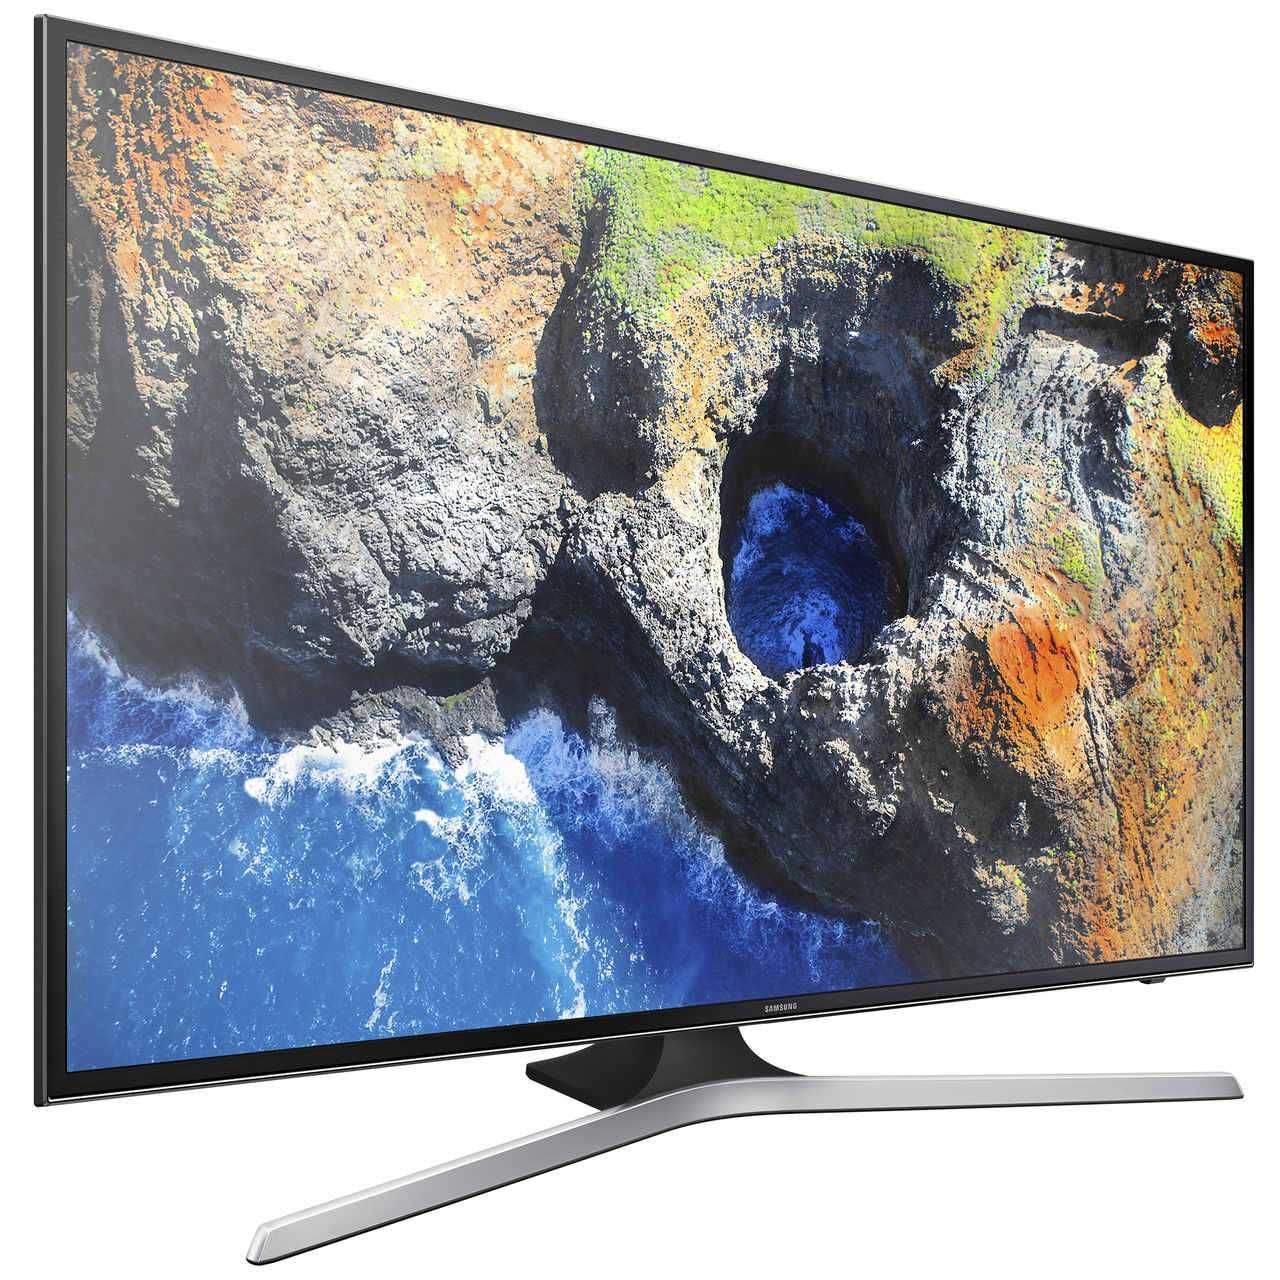 Grave gift Characterize Televizor LED Smart Samsung, 138 cm, 55MU6102, 4K Ultra HD, Clasa A Otopeni  • OLX.ro